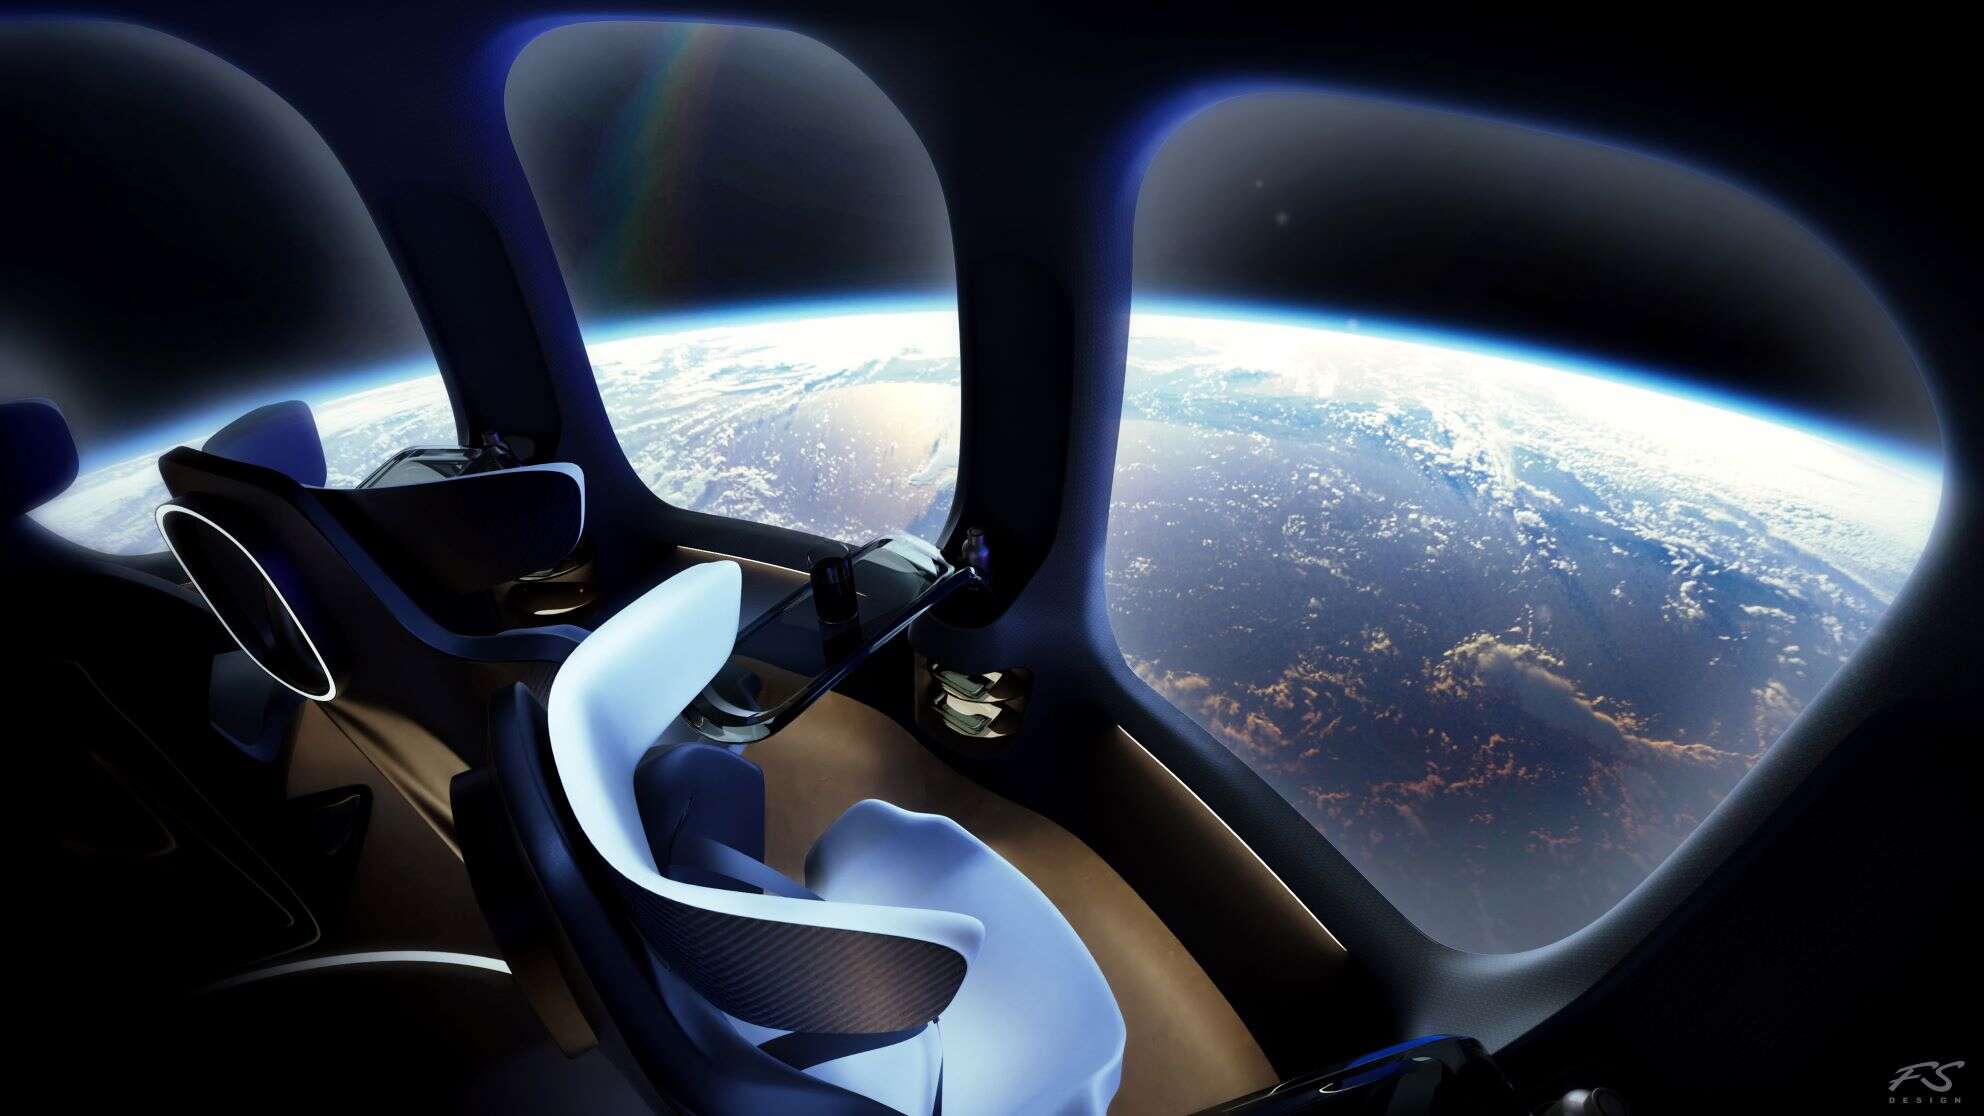 Halo Space capsule seat 